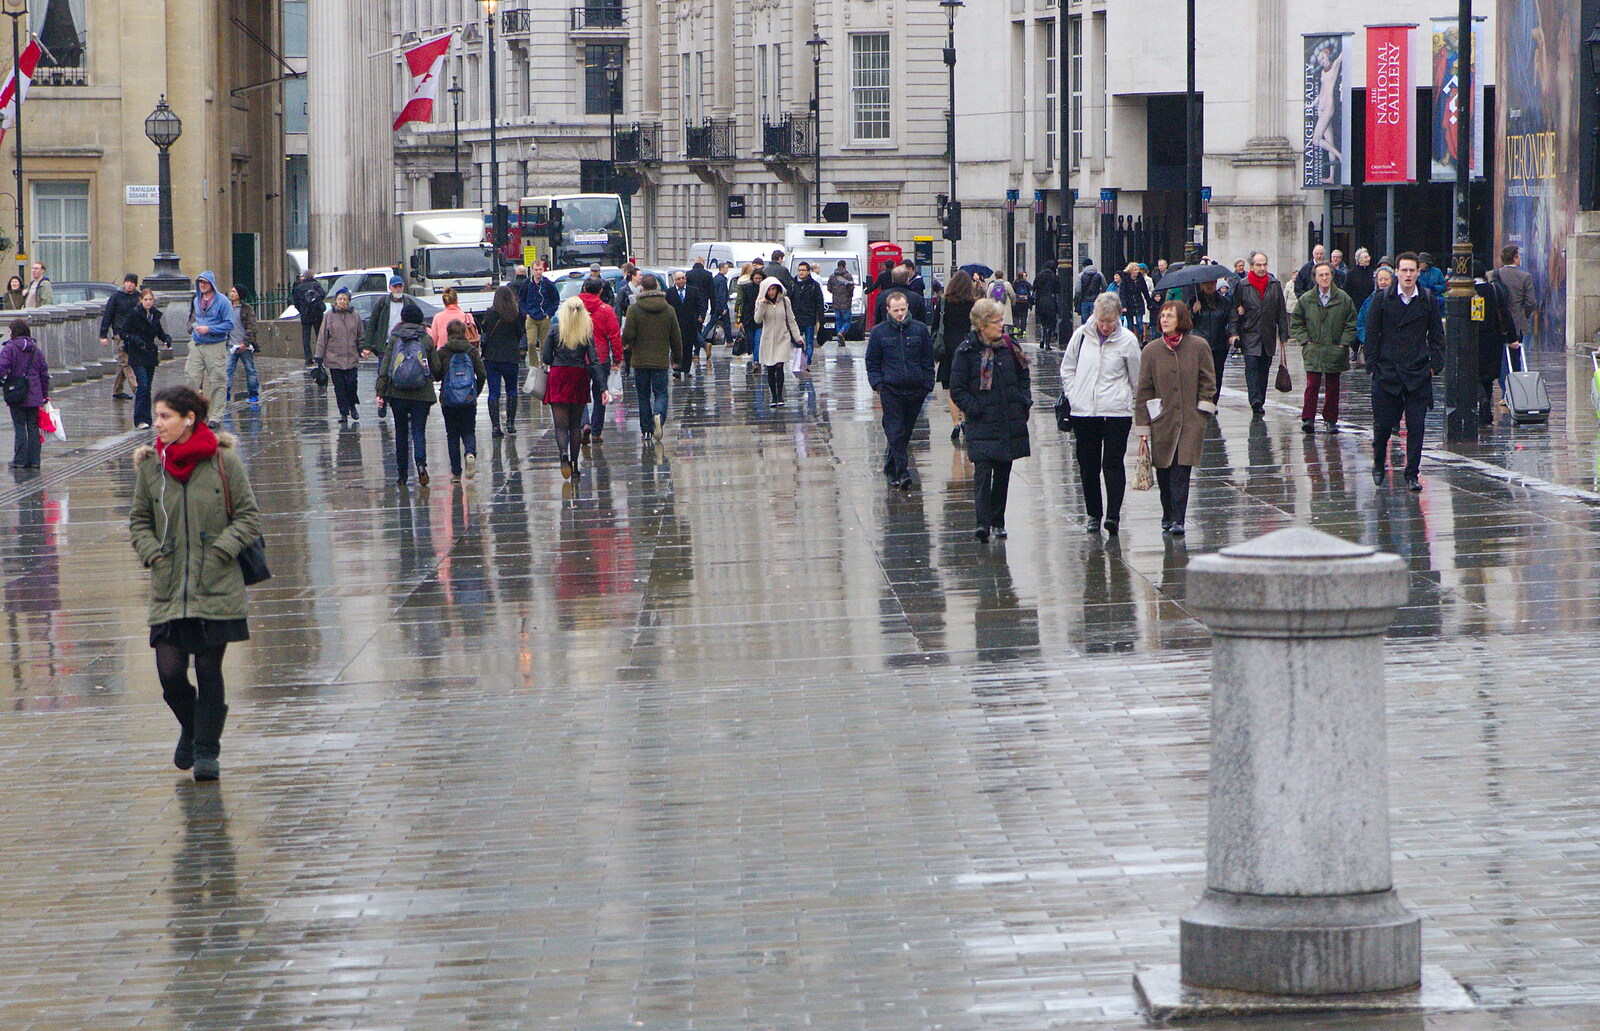 Wet cobbles around Trafalgar Square from SwiftKey Innovation, The Hub, Westminster, London - 21st February 2014